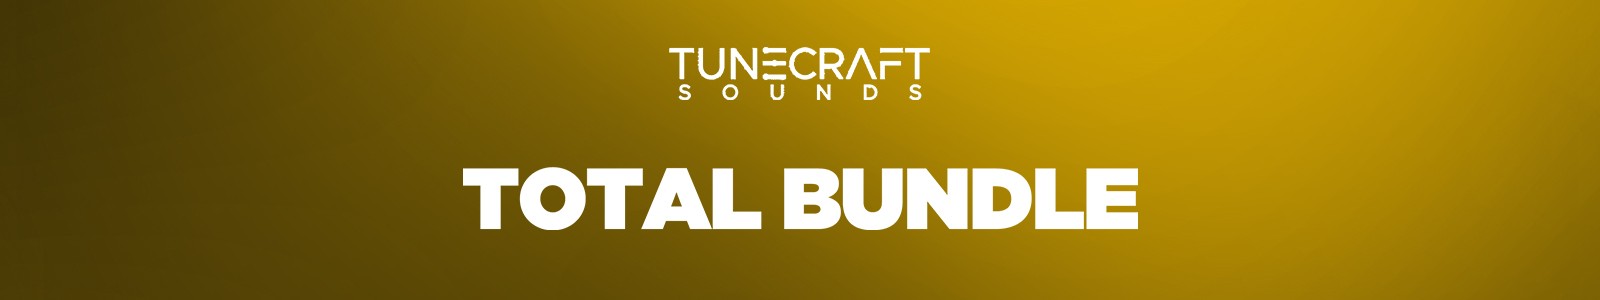 Tunecraft Sounds Total Bundle